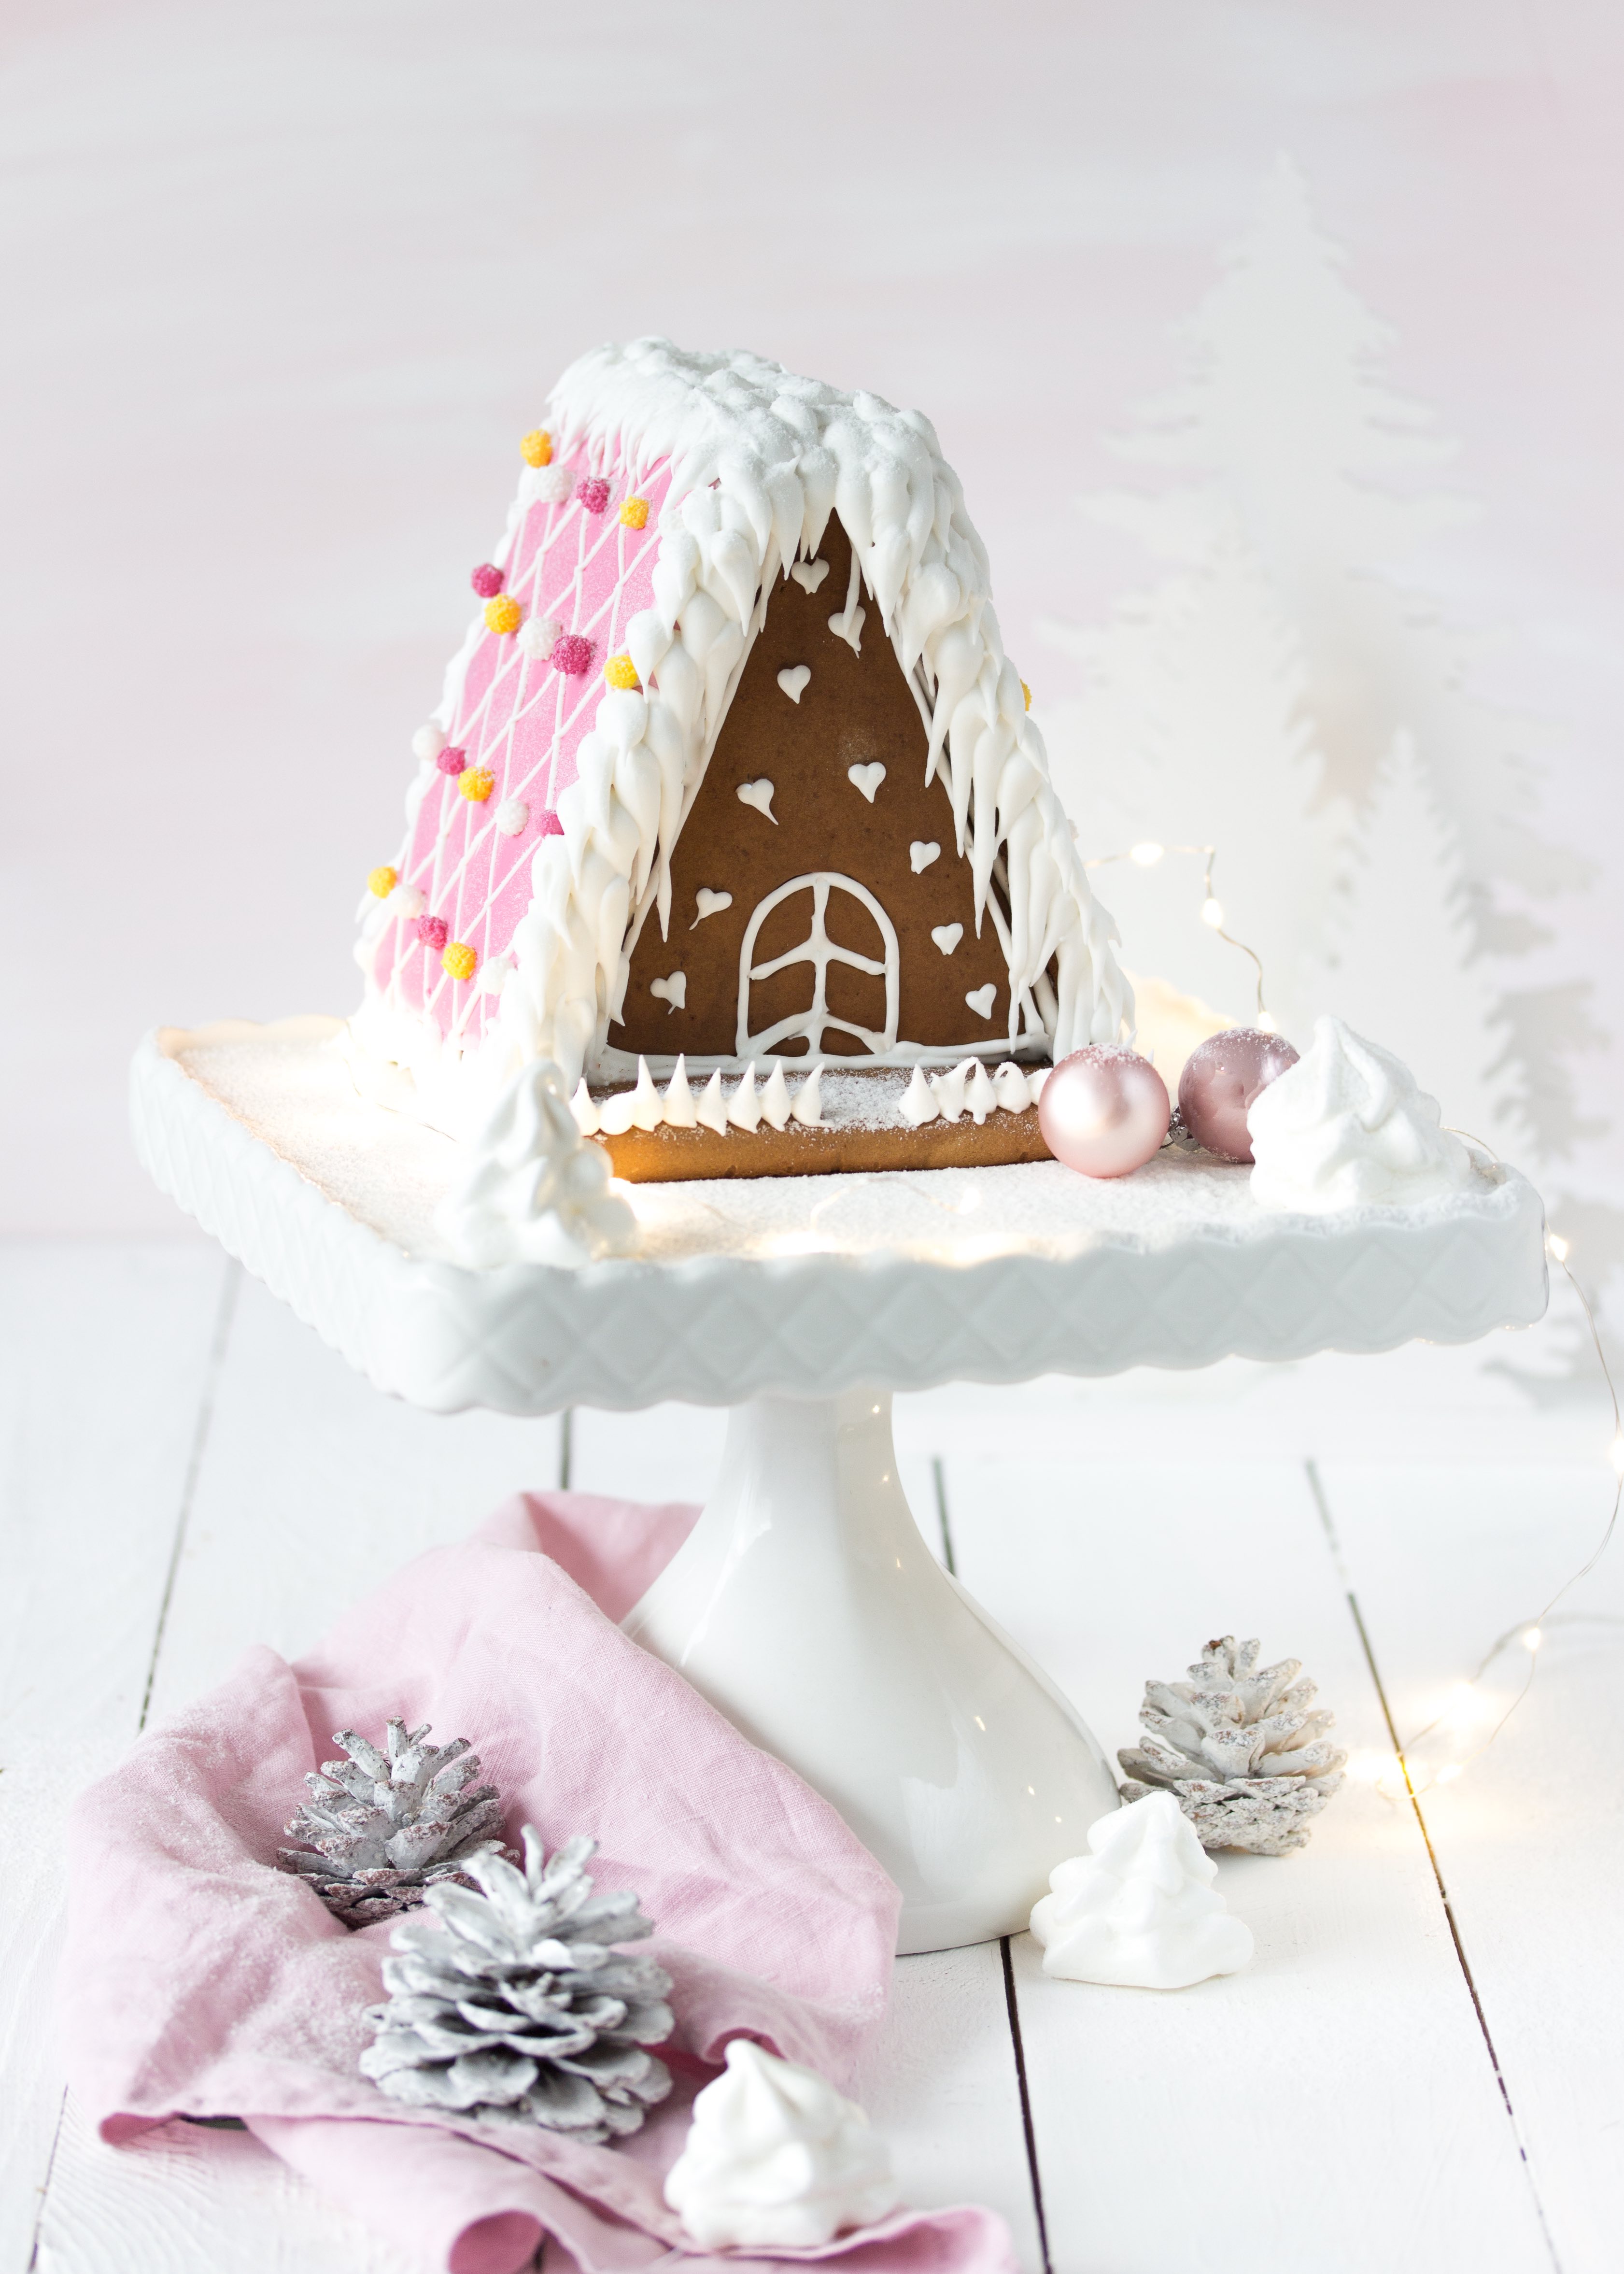 DIY Knusperhäuschen Dekorieren Lebkuchen Gingerbread Weihnachten Christmas